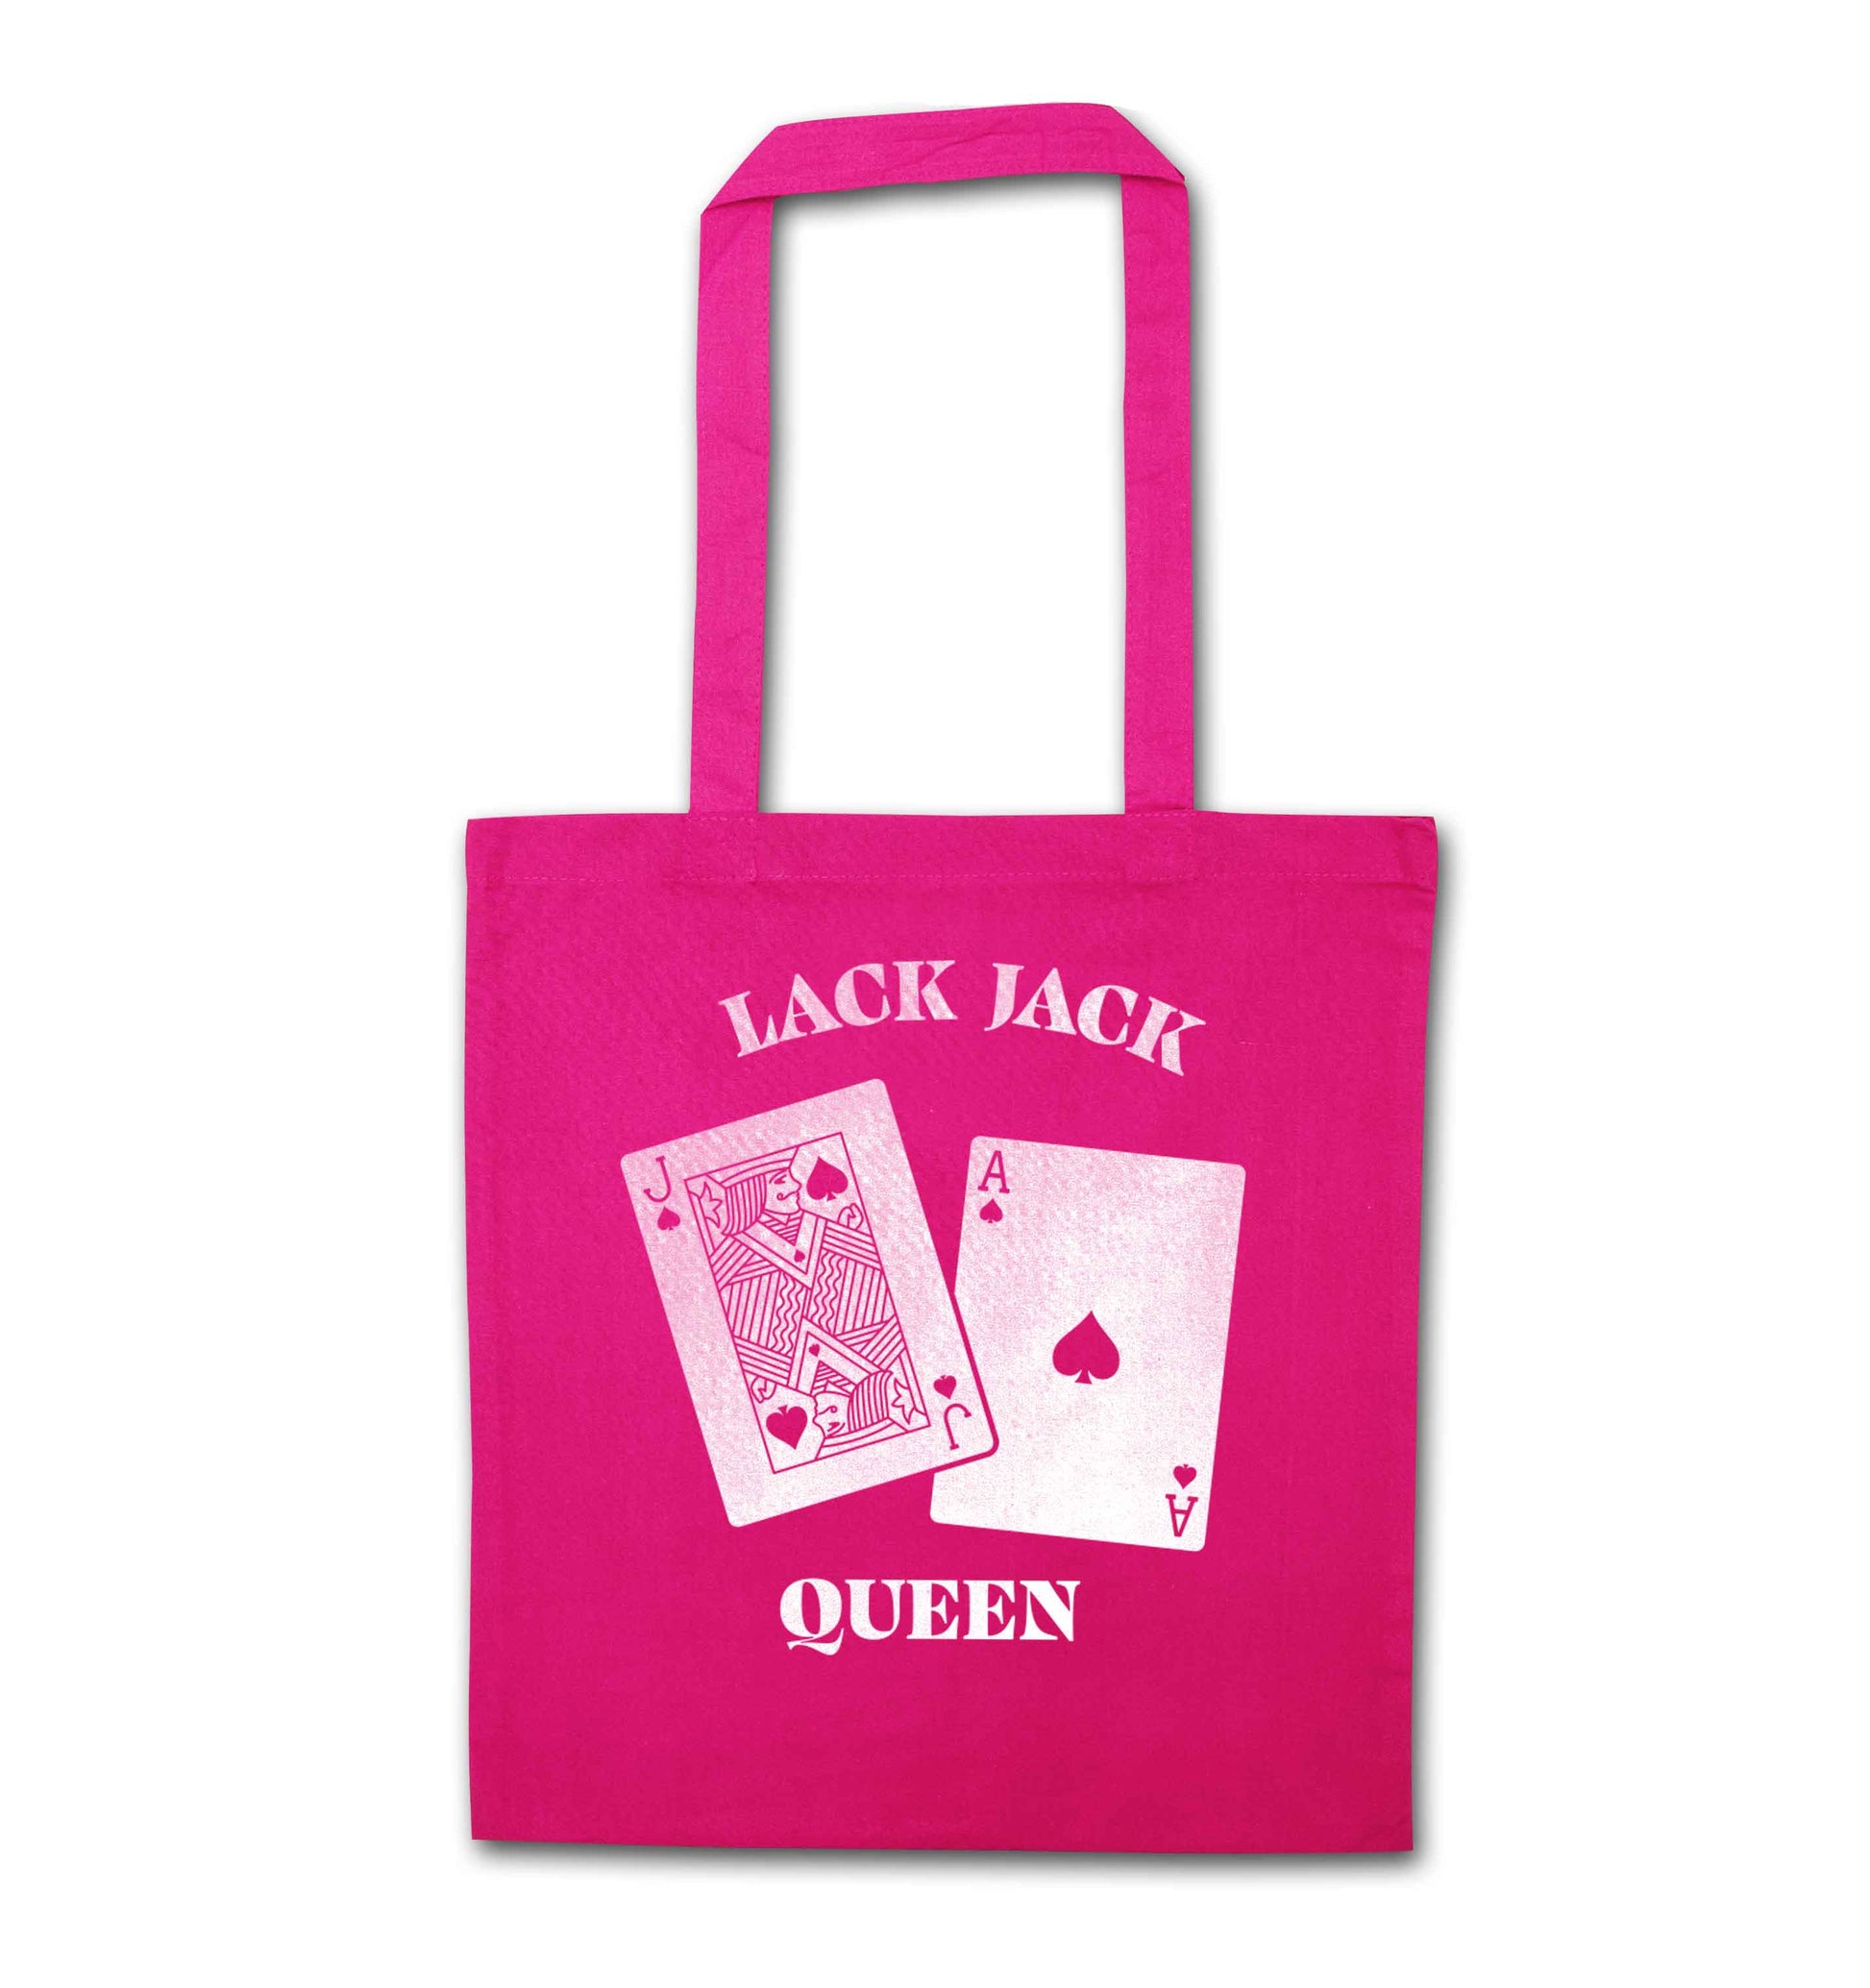 Blackjack queen pink tote bag